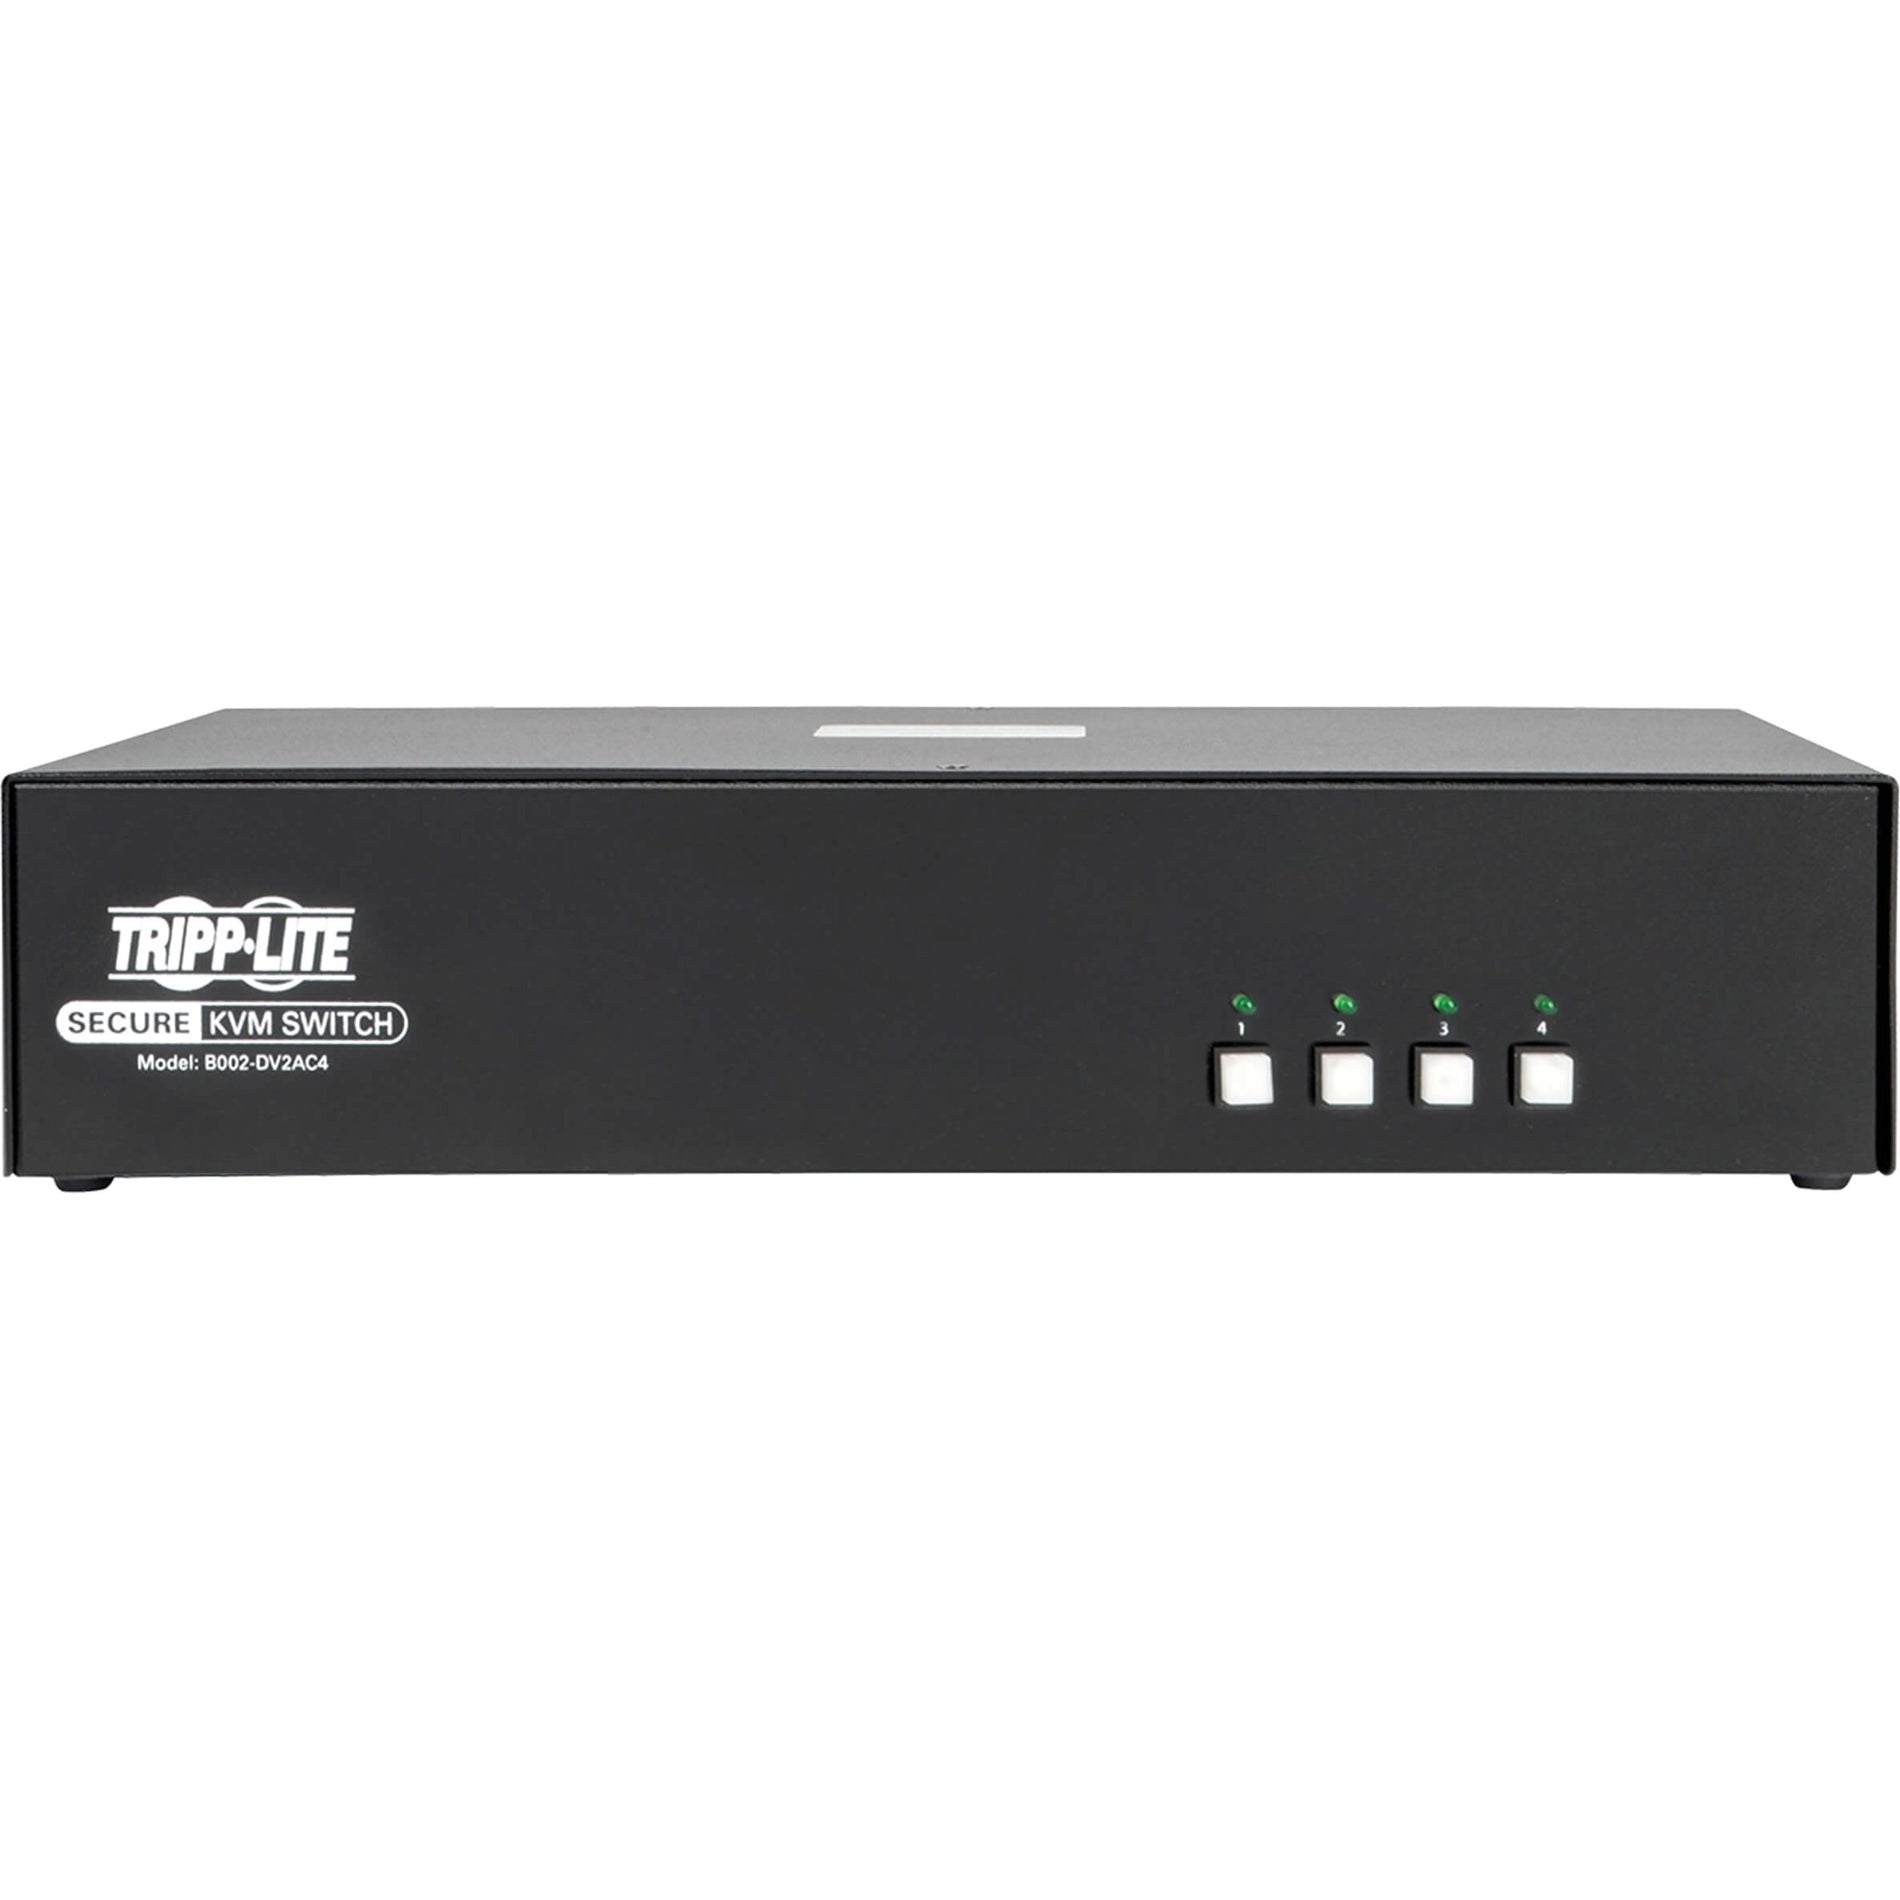 Tripp Lite B002-DV2AC4 4-Port NIAP PP3.0-Certified DVI-I KVM Switch Maximum Video Resolution 2560 x 1600 3 Year Warranty